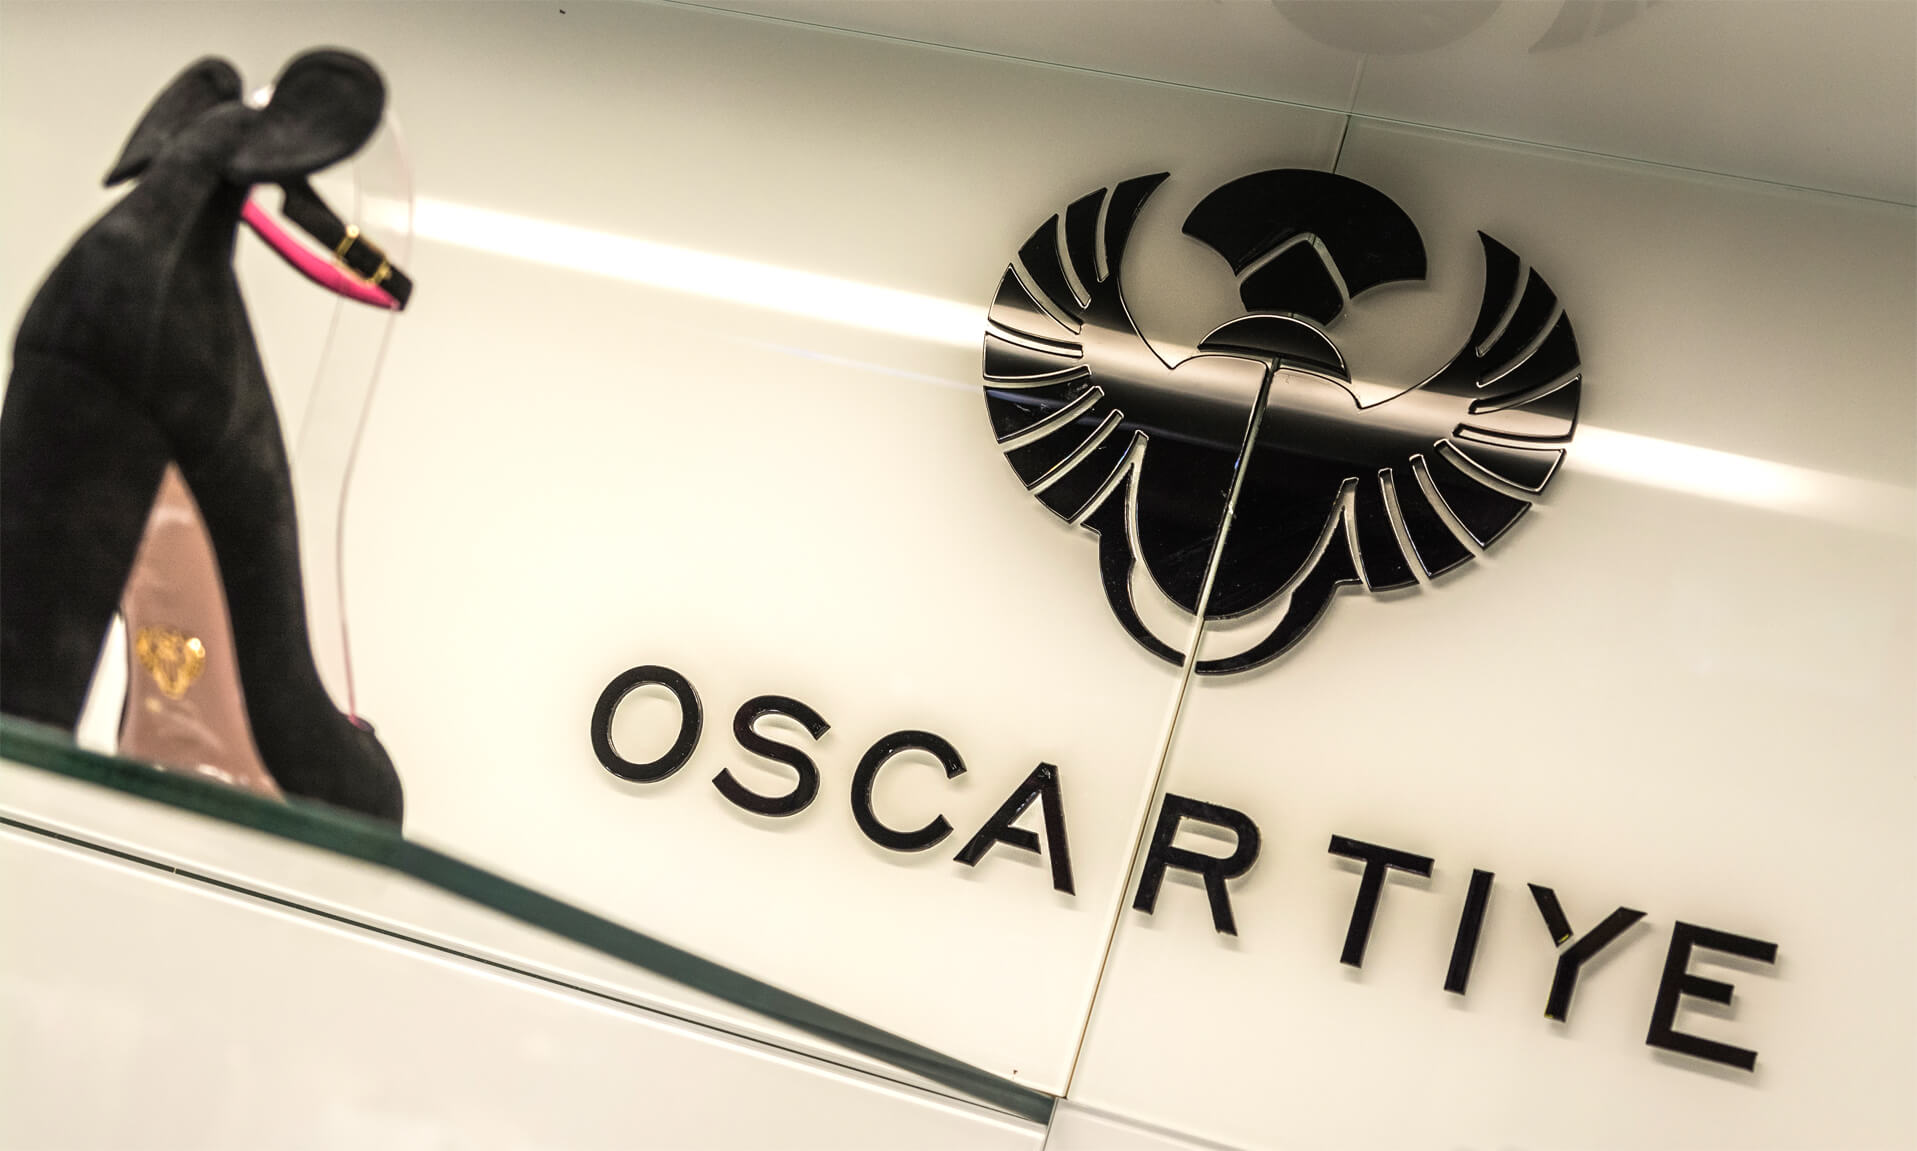 Oscartye - Oscar Tiye - logo and 3D letters made of acrylic in black color